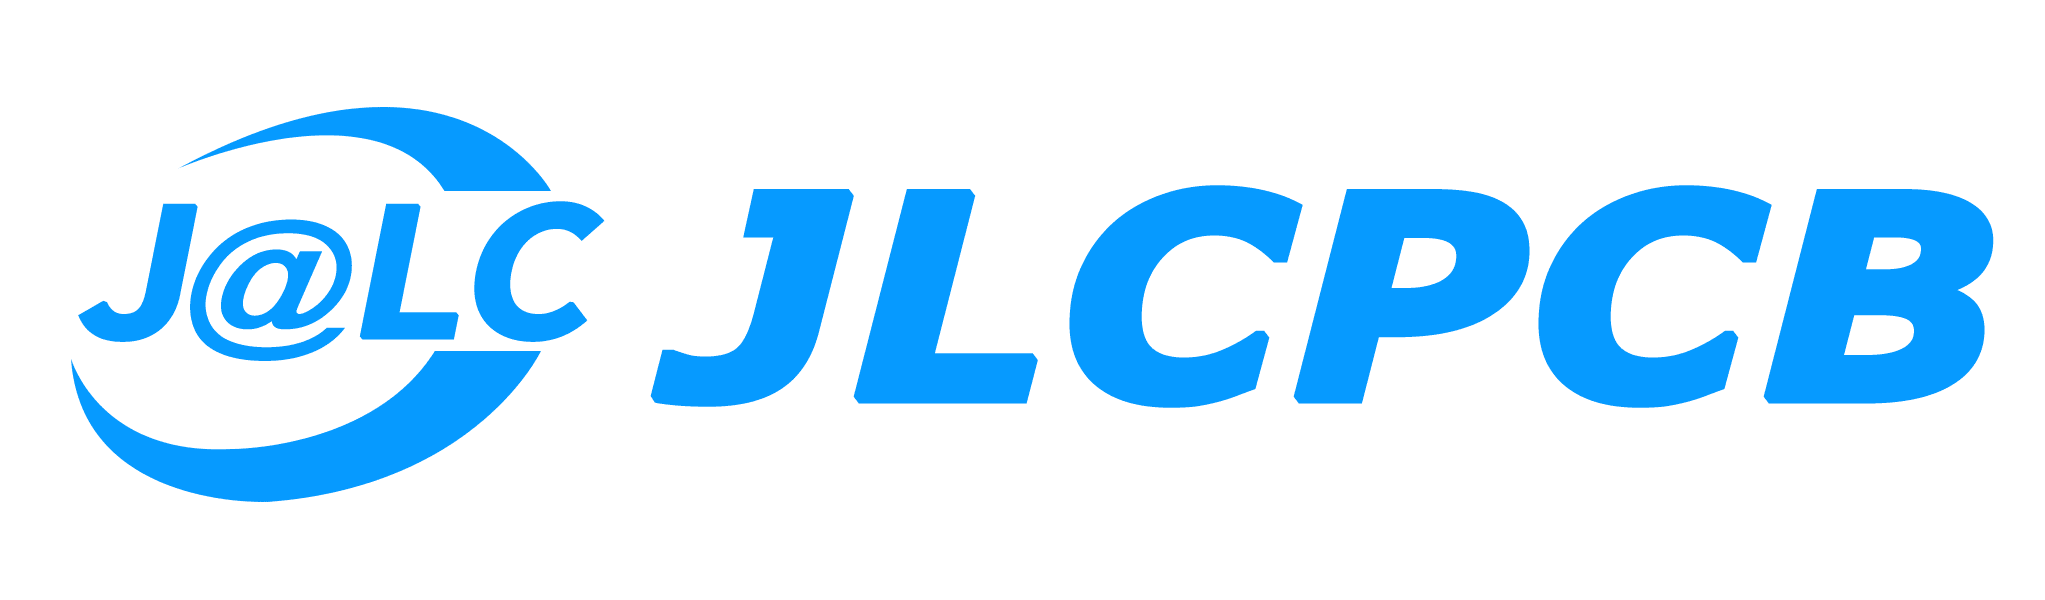 The logo for JLC PCB. Image from https://www.crunchbase.com/organization/jlcpcb, retrieved 2021-03-03.